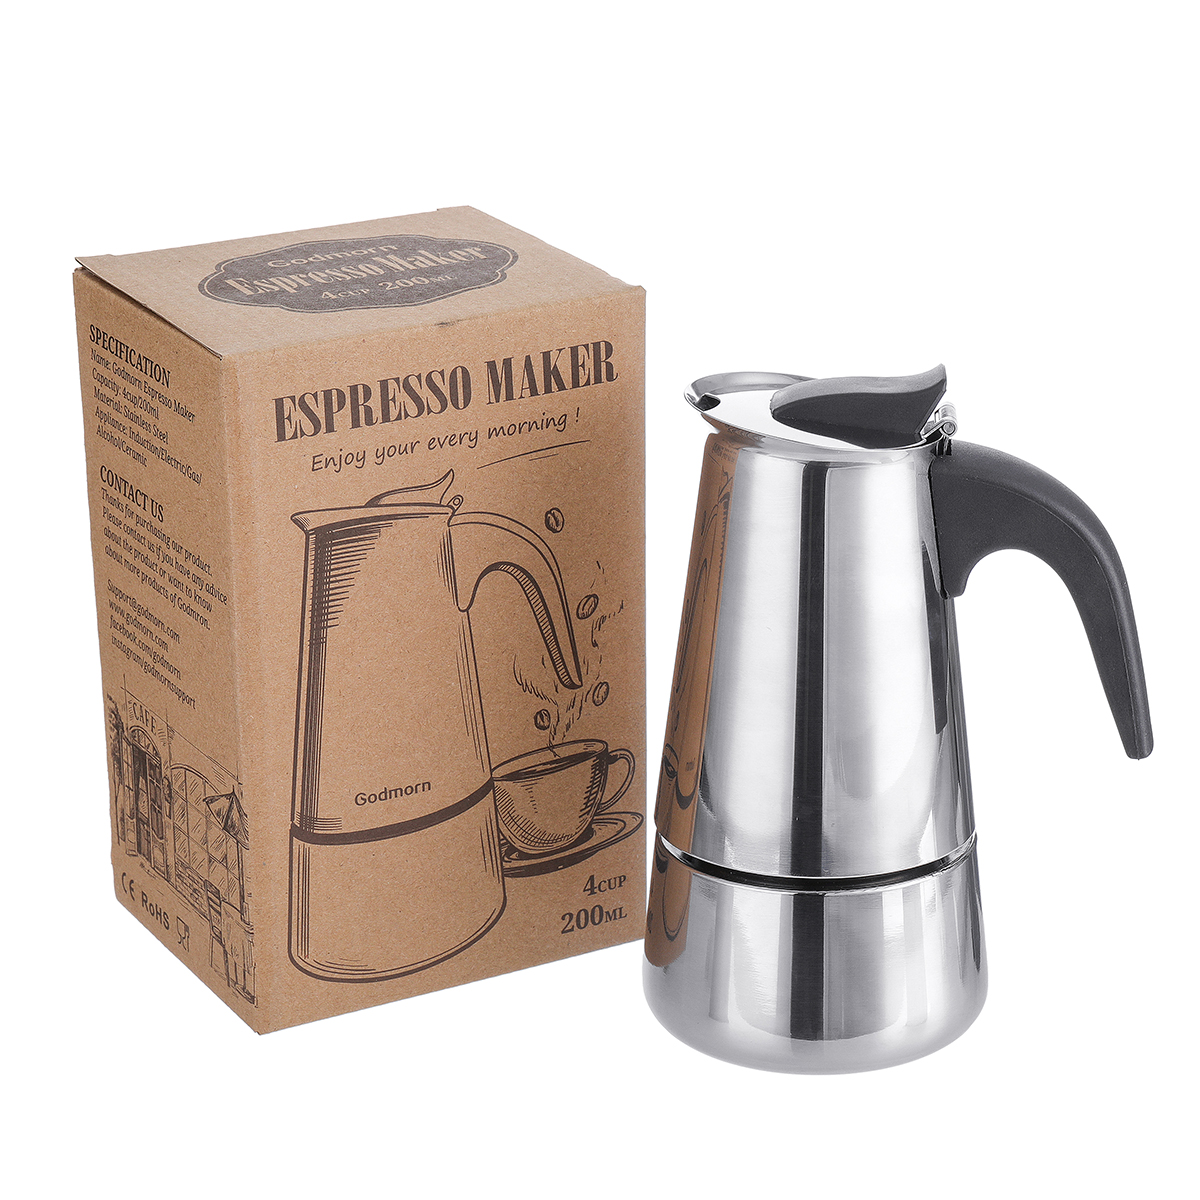 Godmorn-Stovetop-Espresso-Maker-Moka-Pot-450ml15oz9-cup-Classic-Cafe-Percolator-Maker-Stainless-Stee-1736605-10